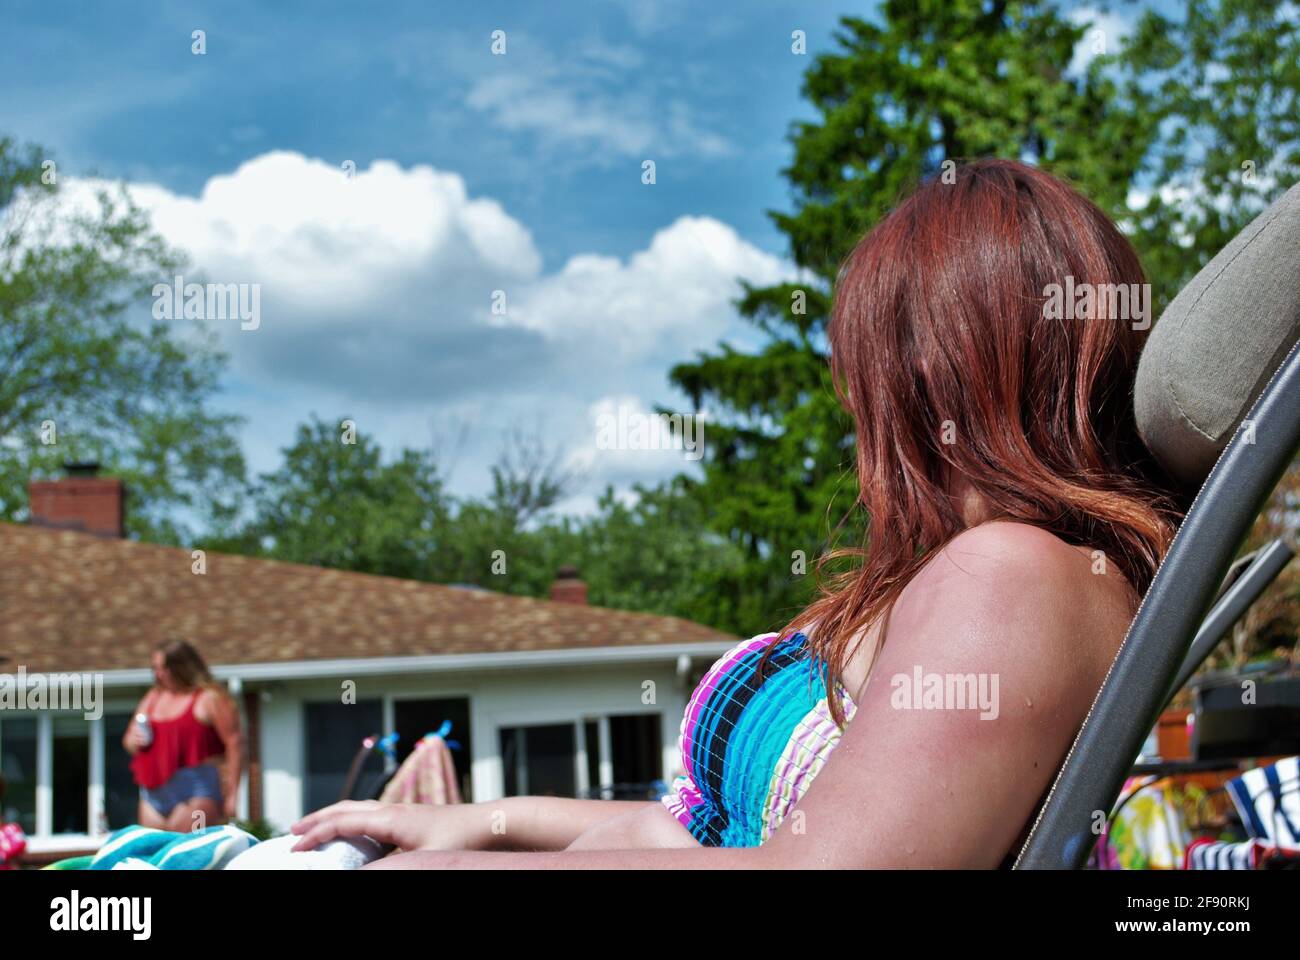 Blonde girl in bikini sunbathing - wide 6